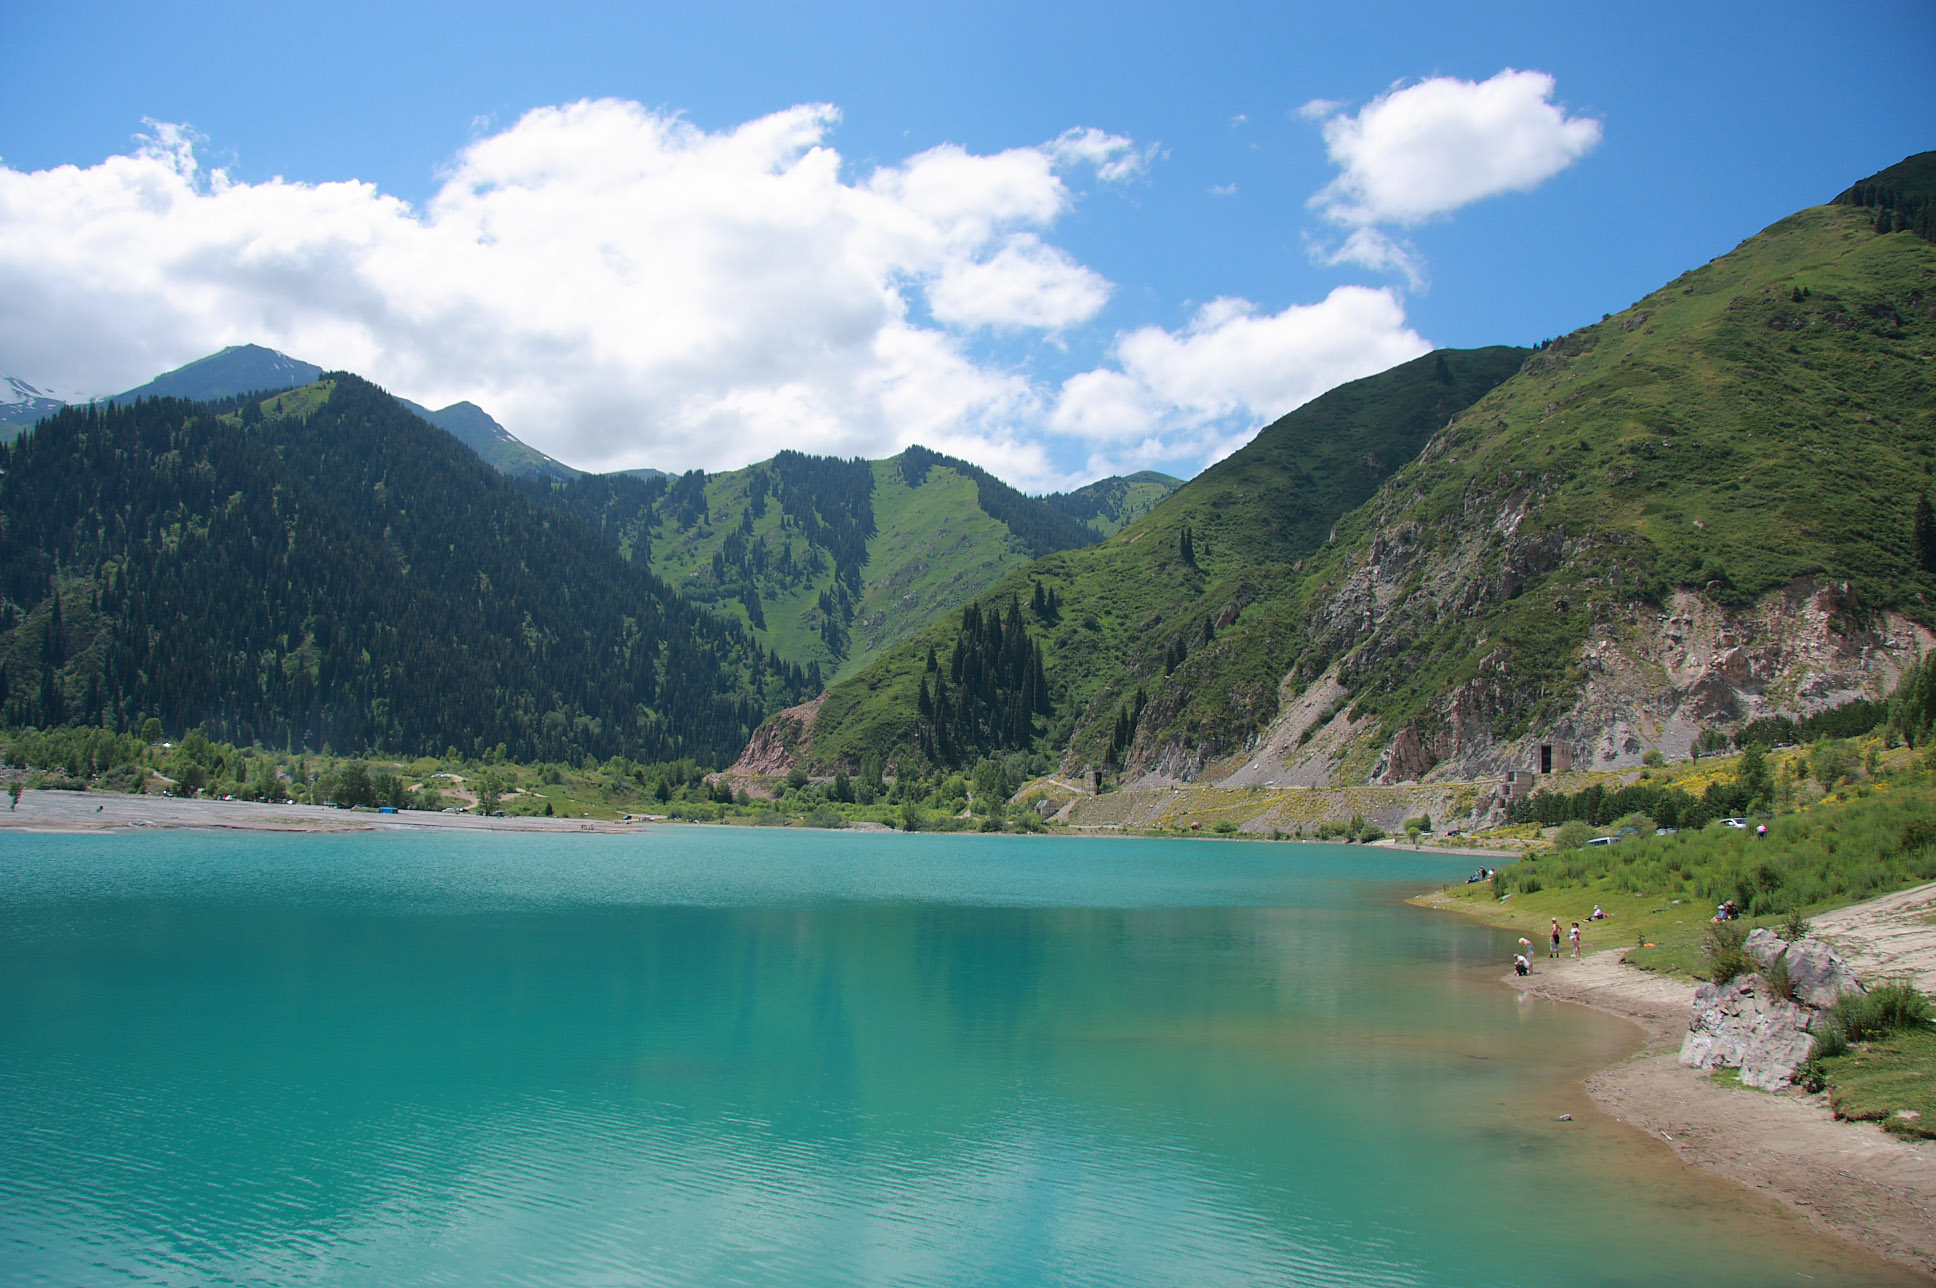 Slika jezera Issyk-Kul